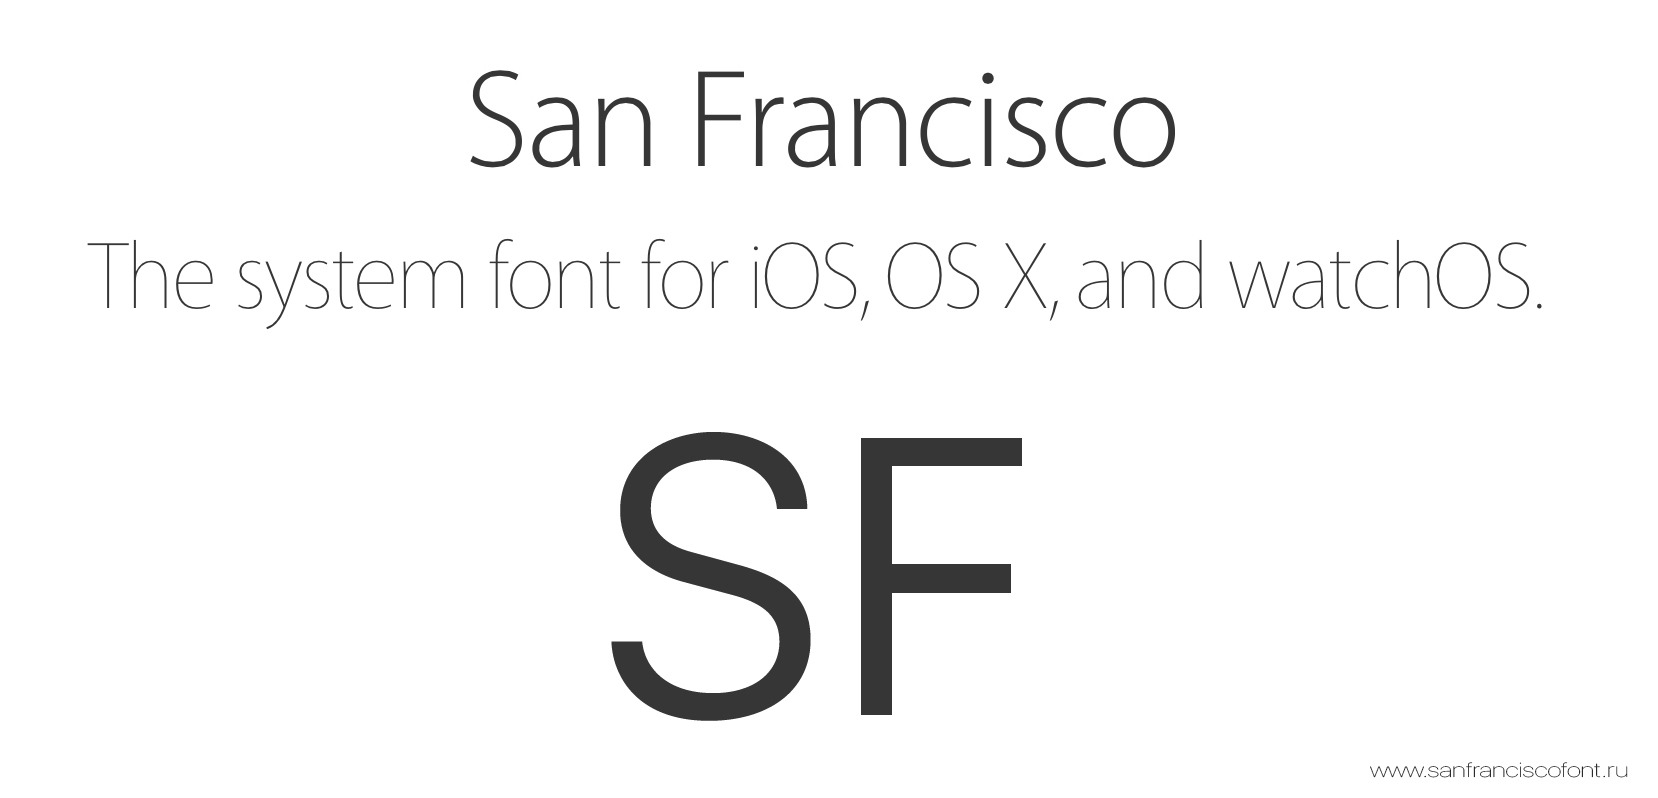 San Francisco Pro Font